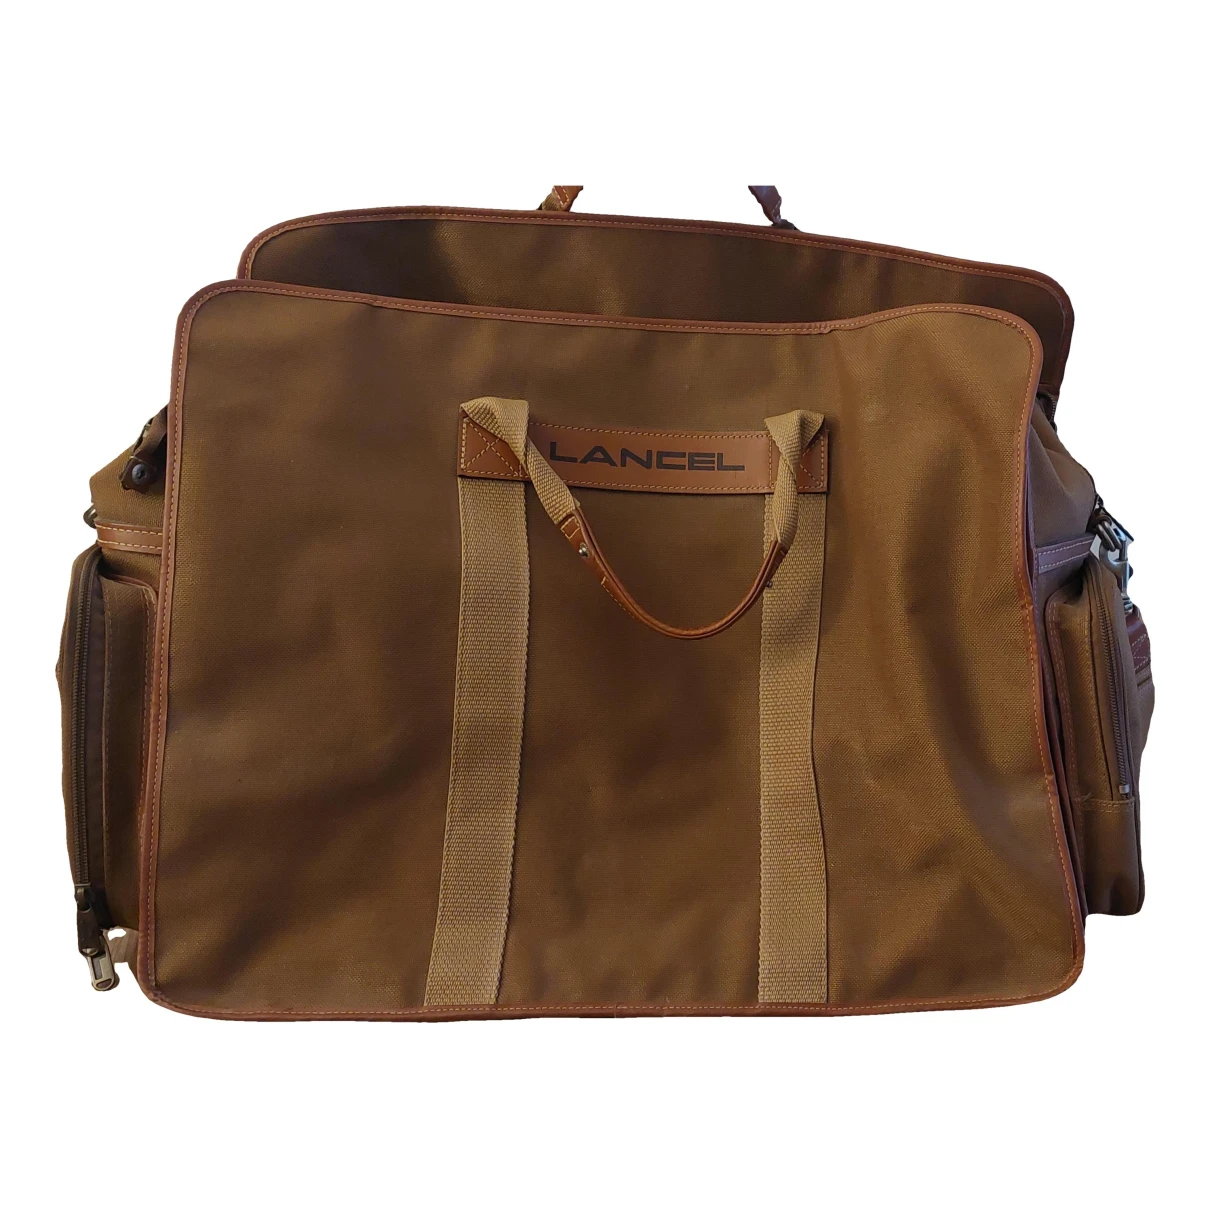 Pre-owned Lancel Cloth Travel Bag In Camel